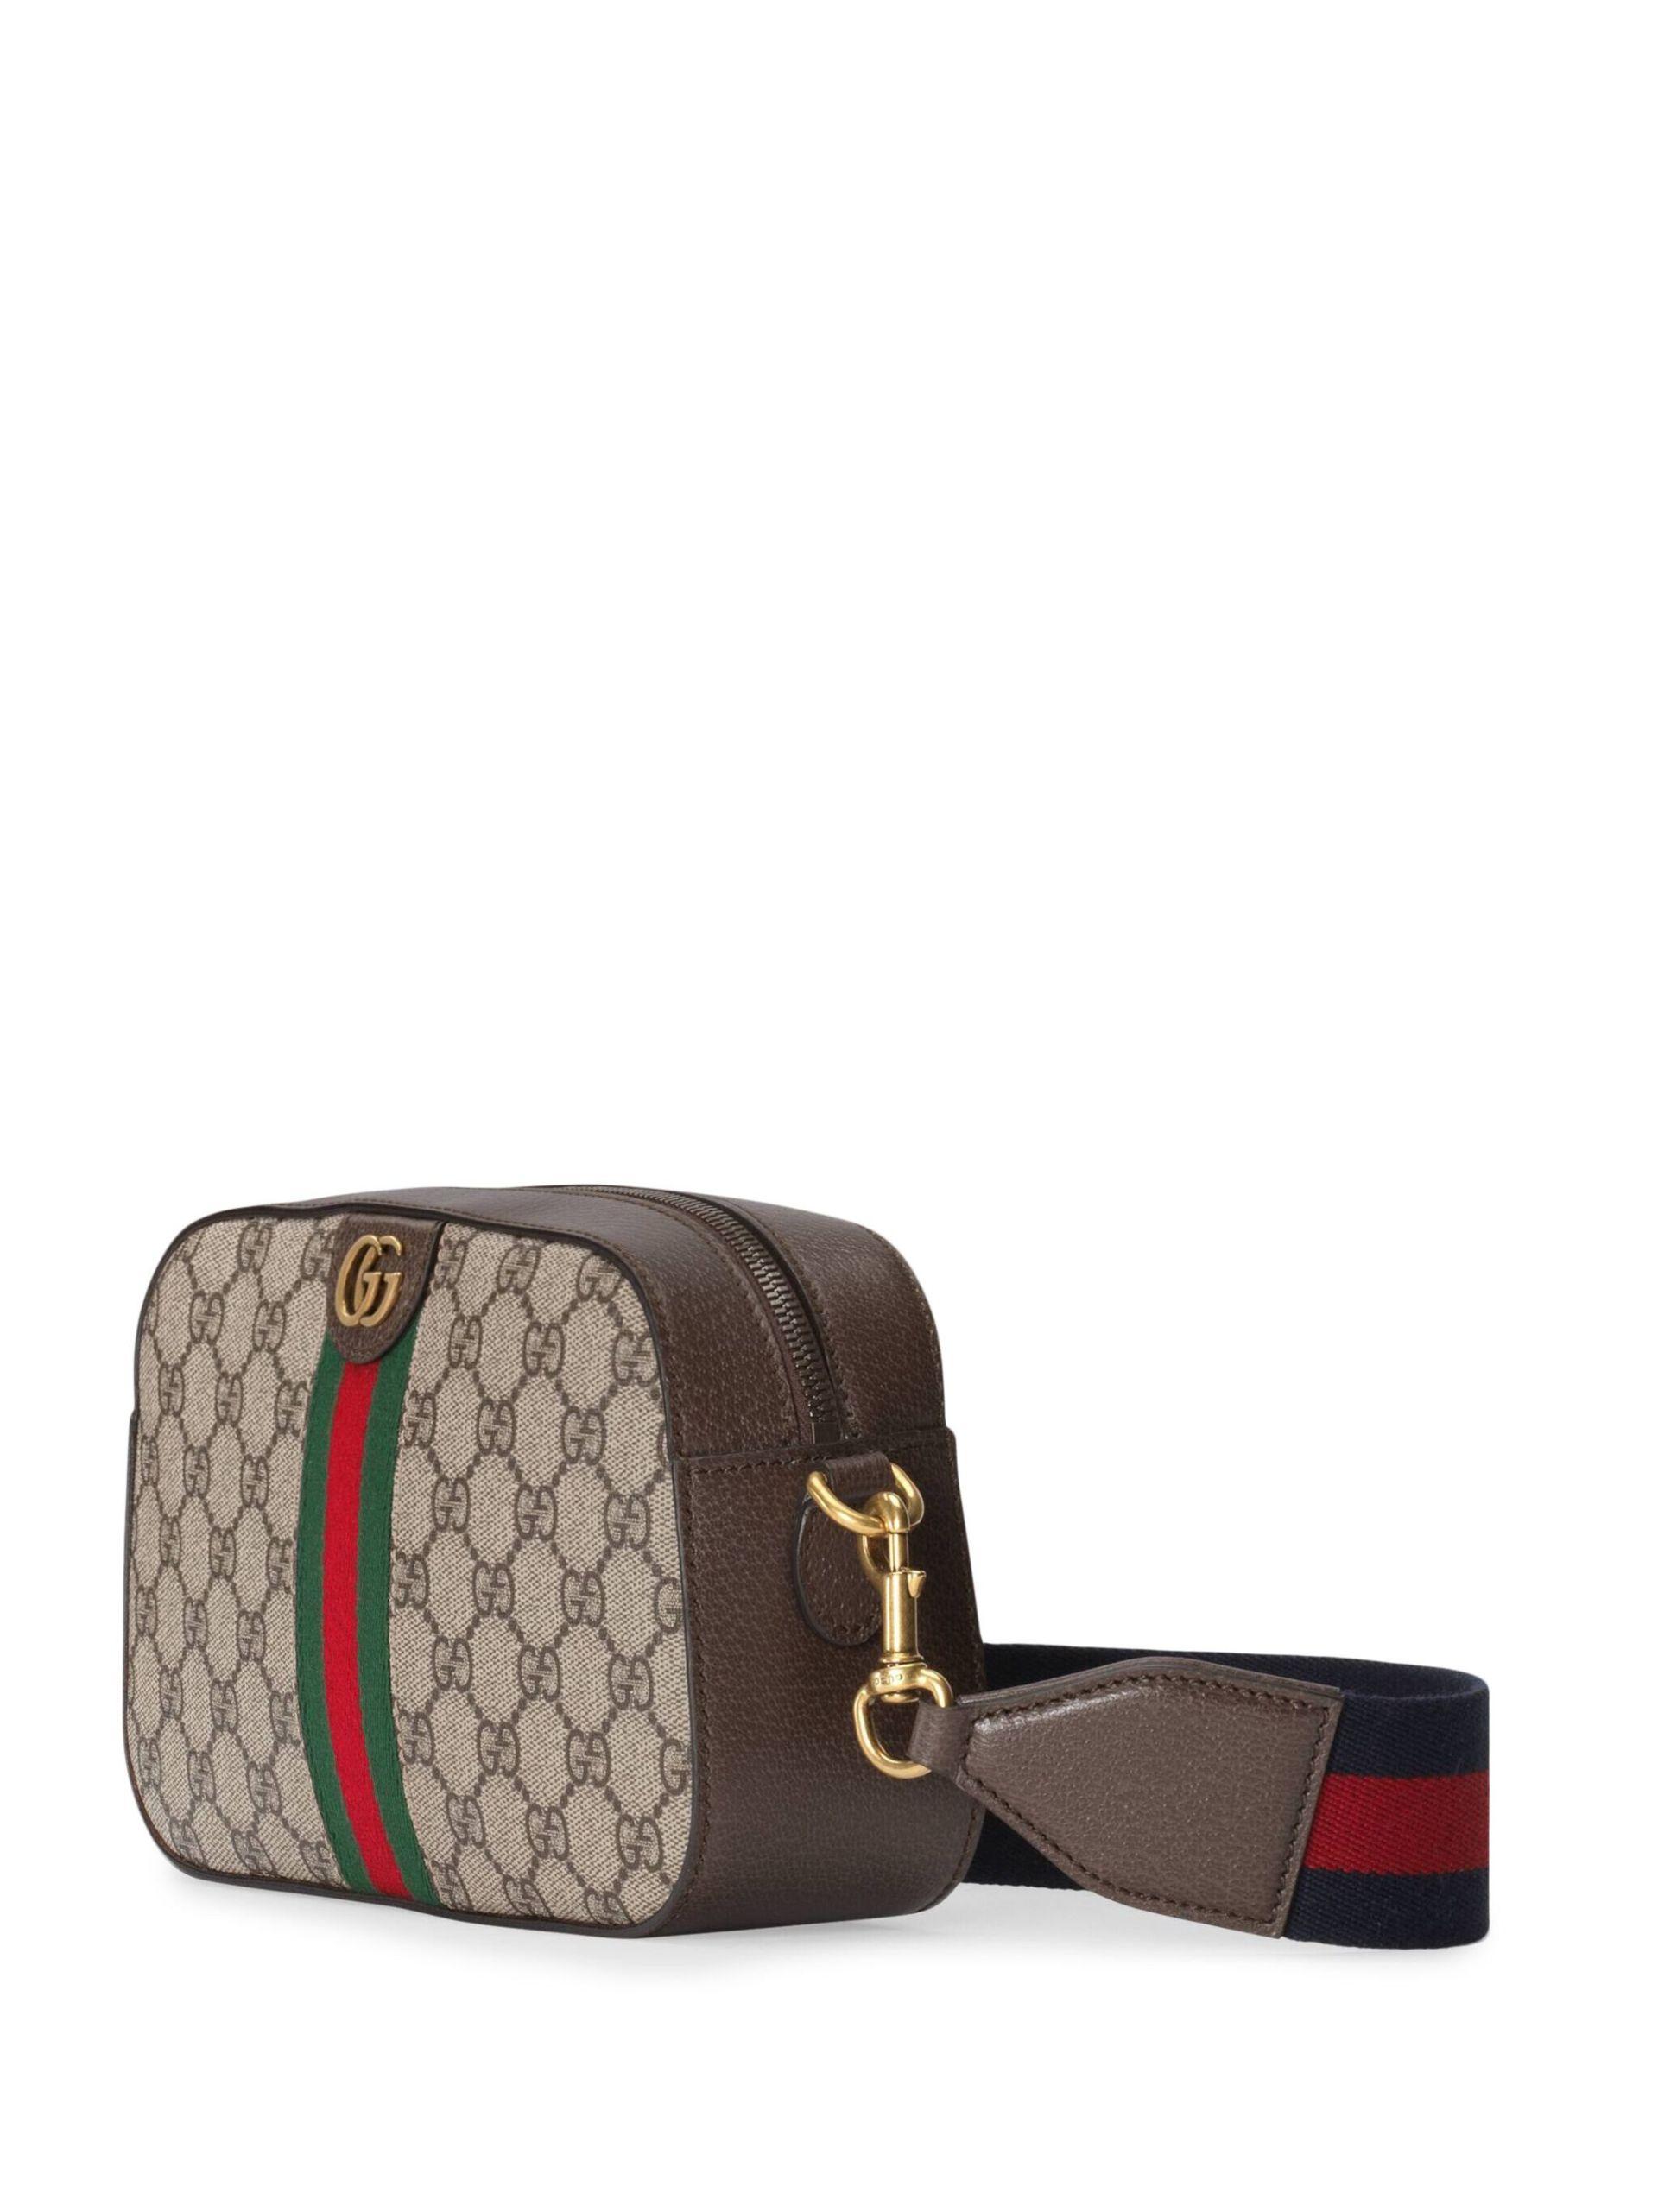 Gucci Messenger Ophidia Brown Gg Supreme Canvas Shoulder Bag - MyDesignerly